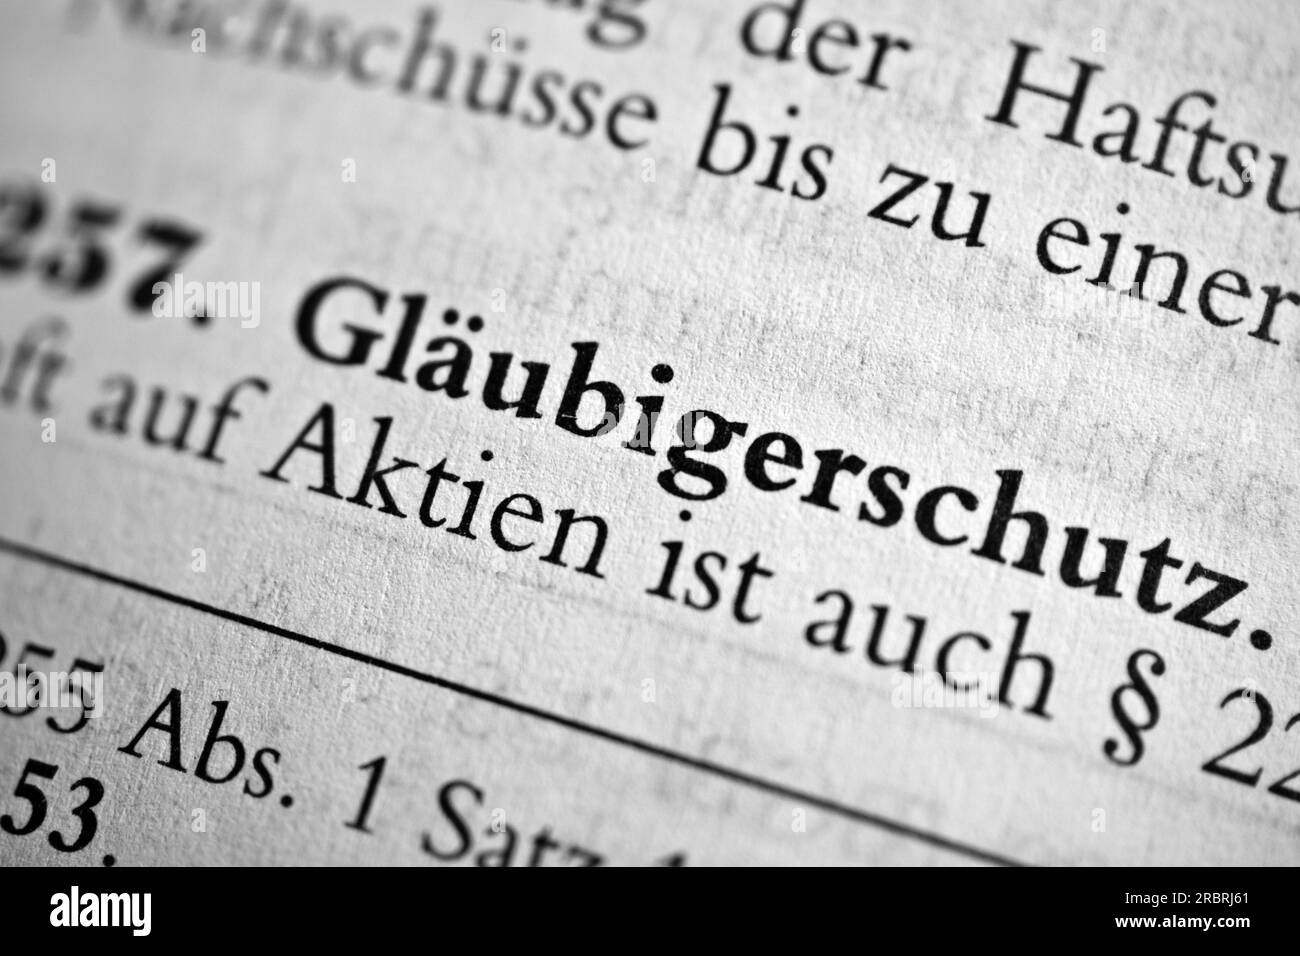 Glaeubigerschutz Stock Photo